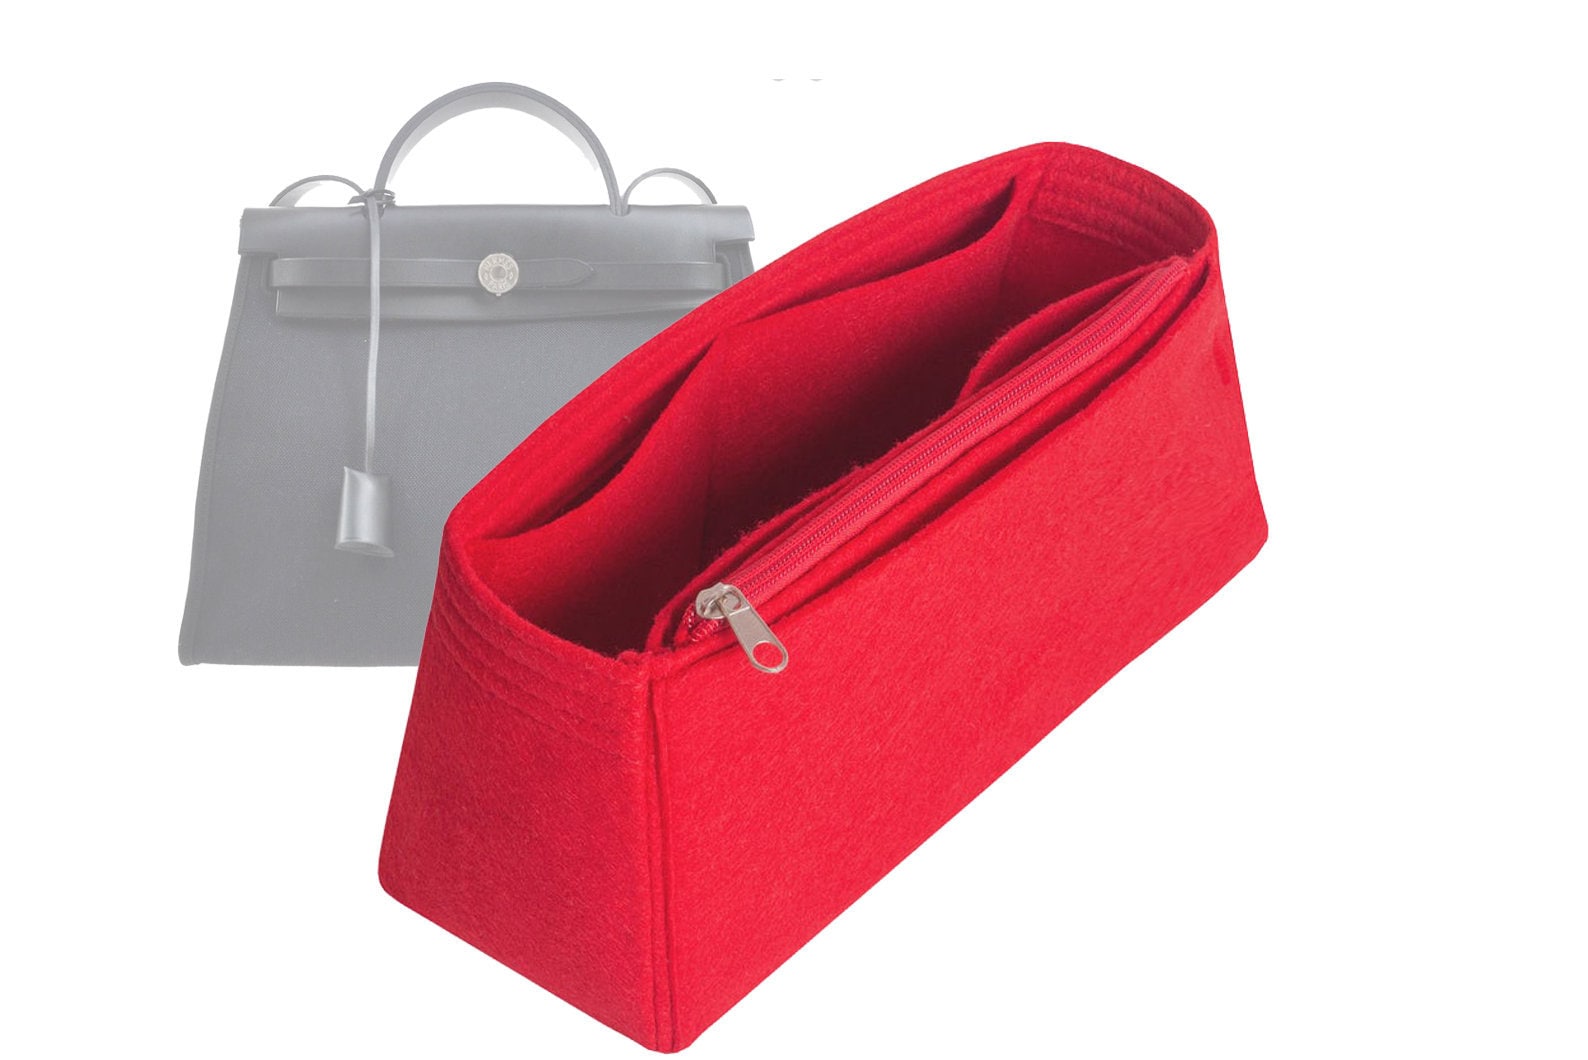 For Birkin 25 Bag Insert Organizer, Purse Insert Organizer, Bag Shaper, Bag Liner - Worldwide Shipping 4-6 Days